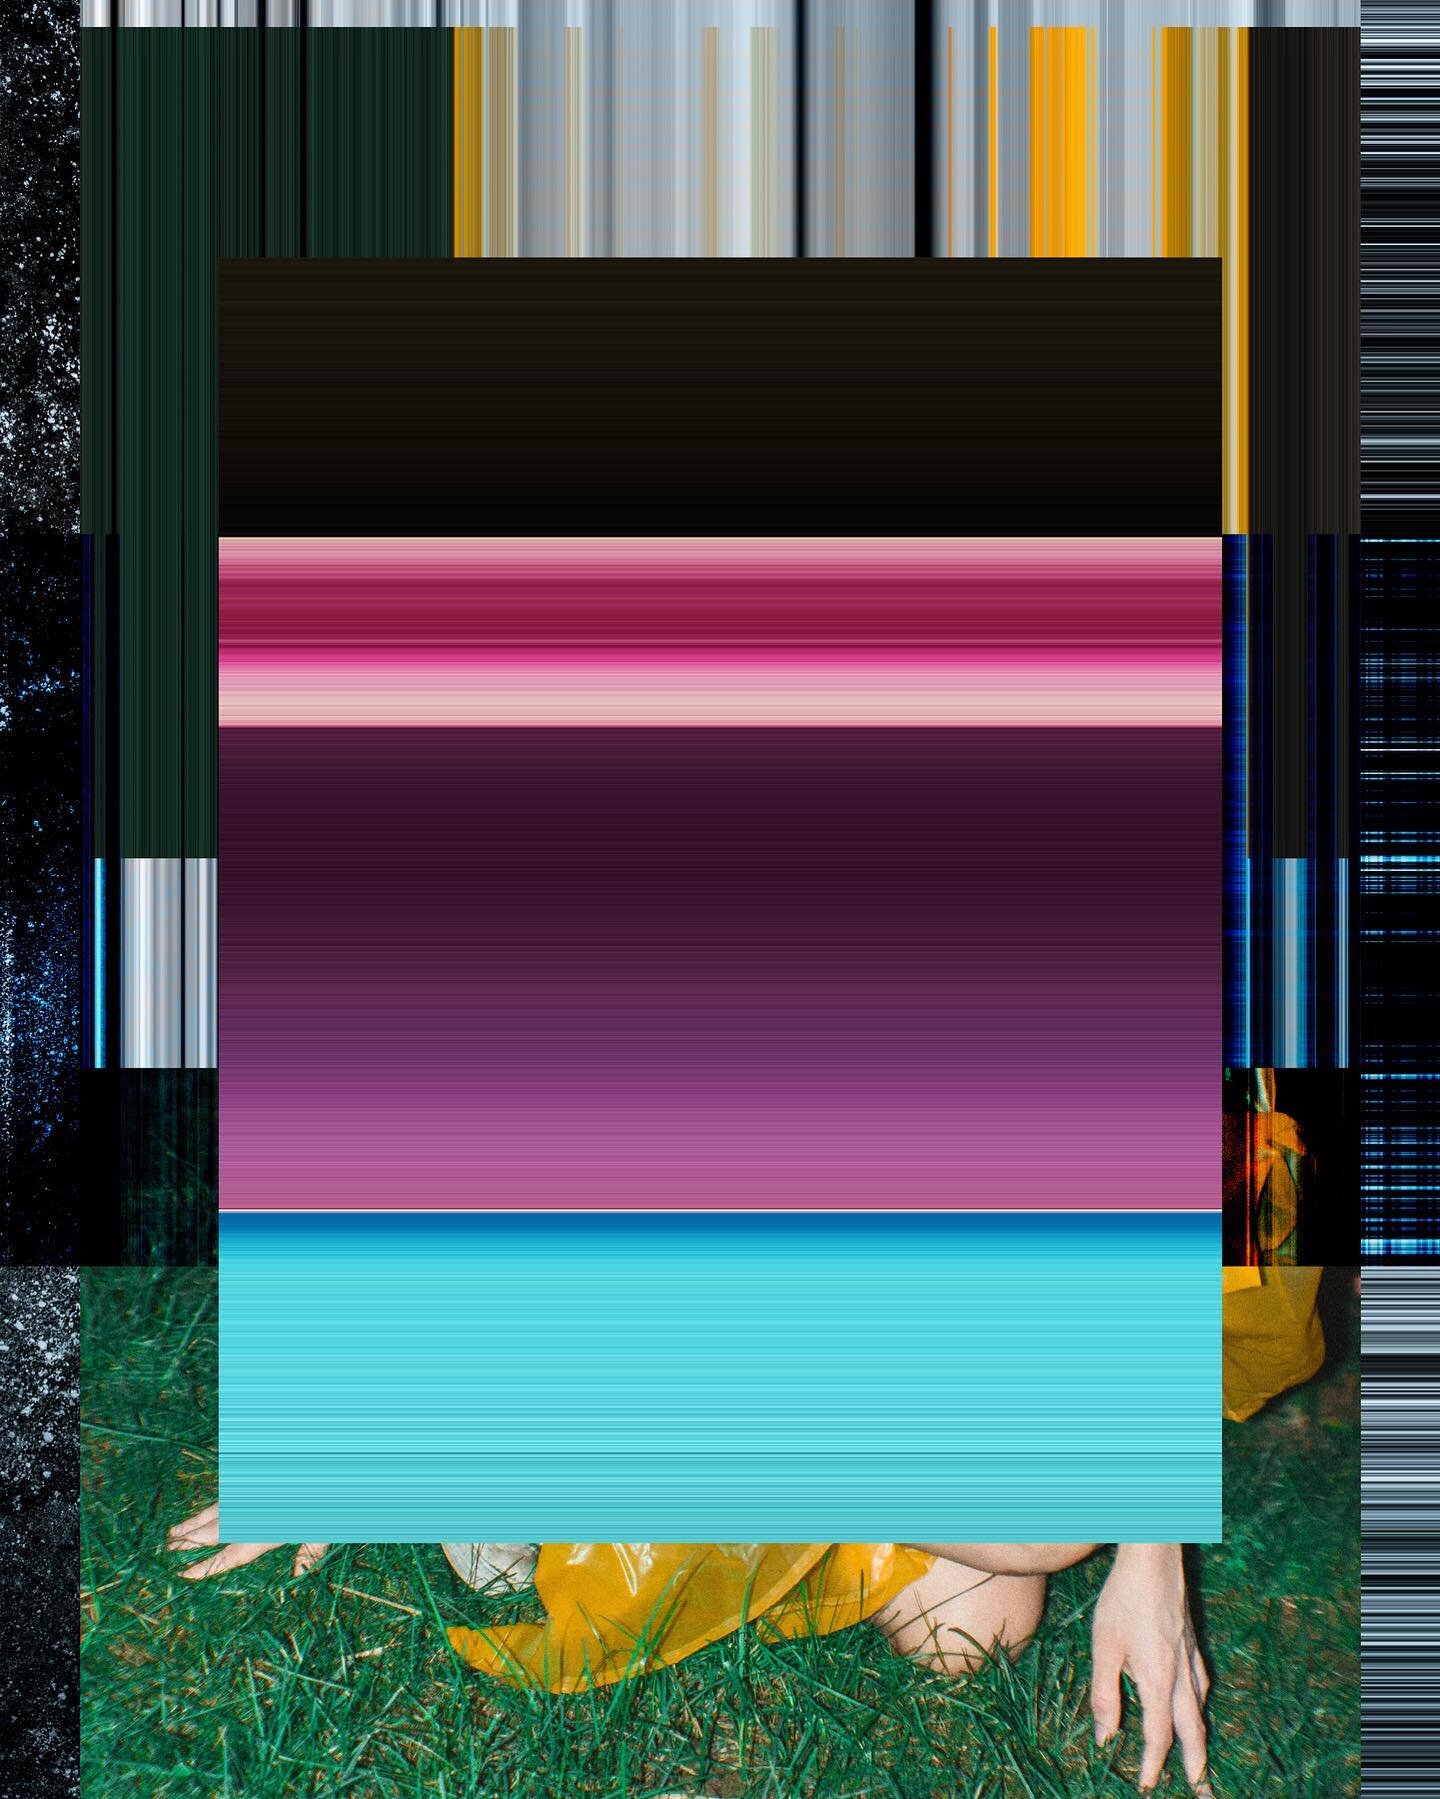 Data Composition 012﻿
Toru Izumida﻿
[2020]﻿
﻿
﻿
﻿
─────────────────﻿
#toruizumida #visualart #visualartist #artwork #art #artist #abstract #abstractart #digitalart #digitalartist #graphicdesign #graphic #photography #newmediaart #newmediaartist #cont